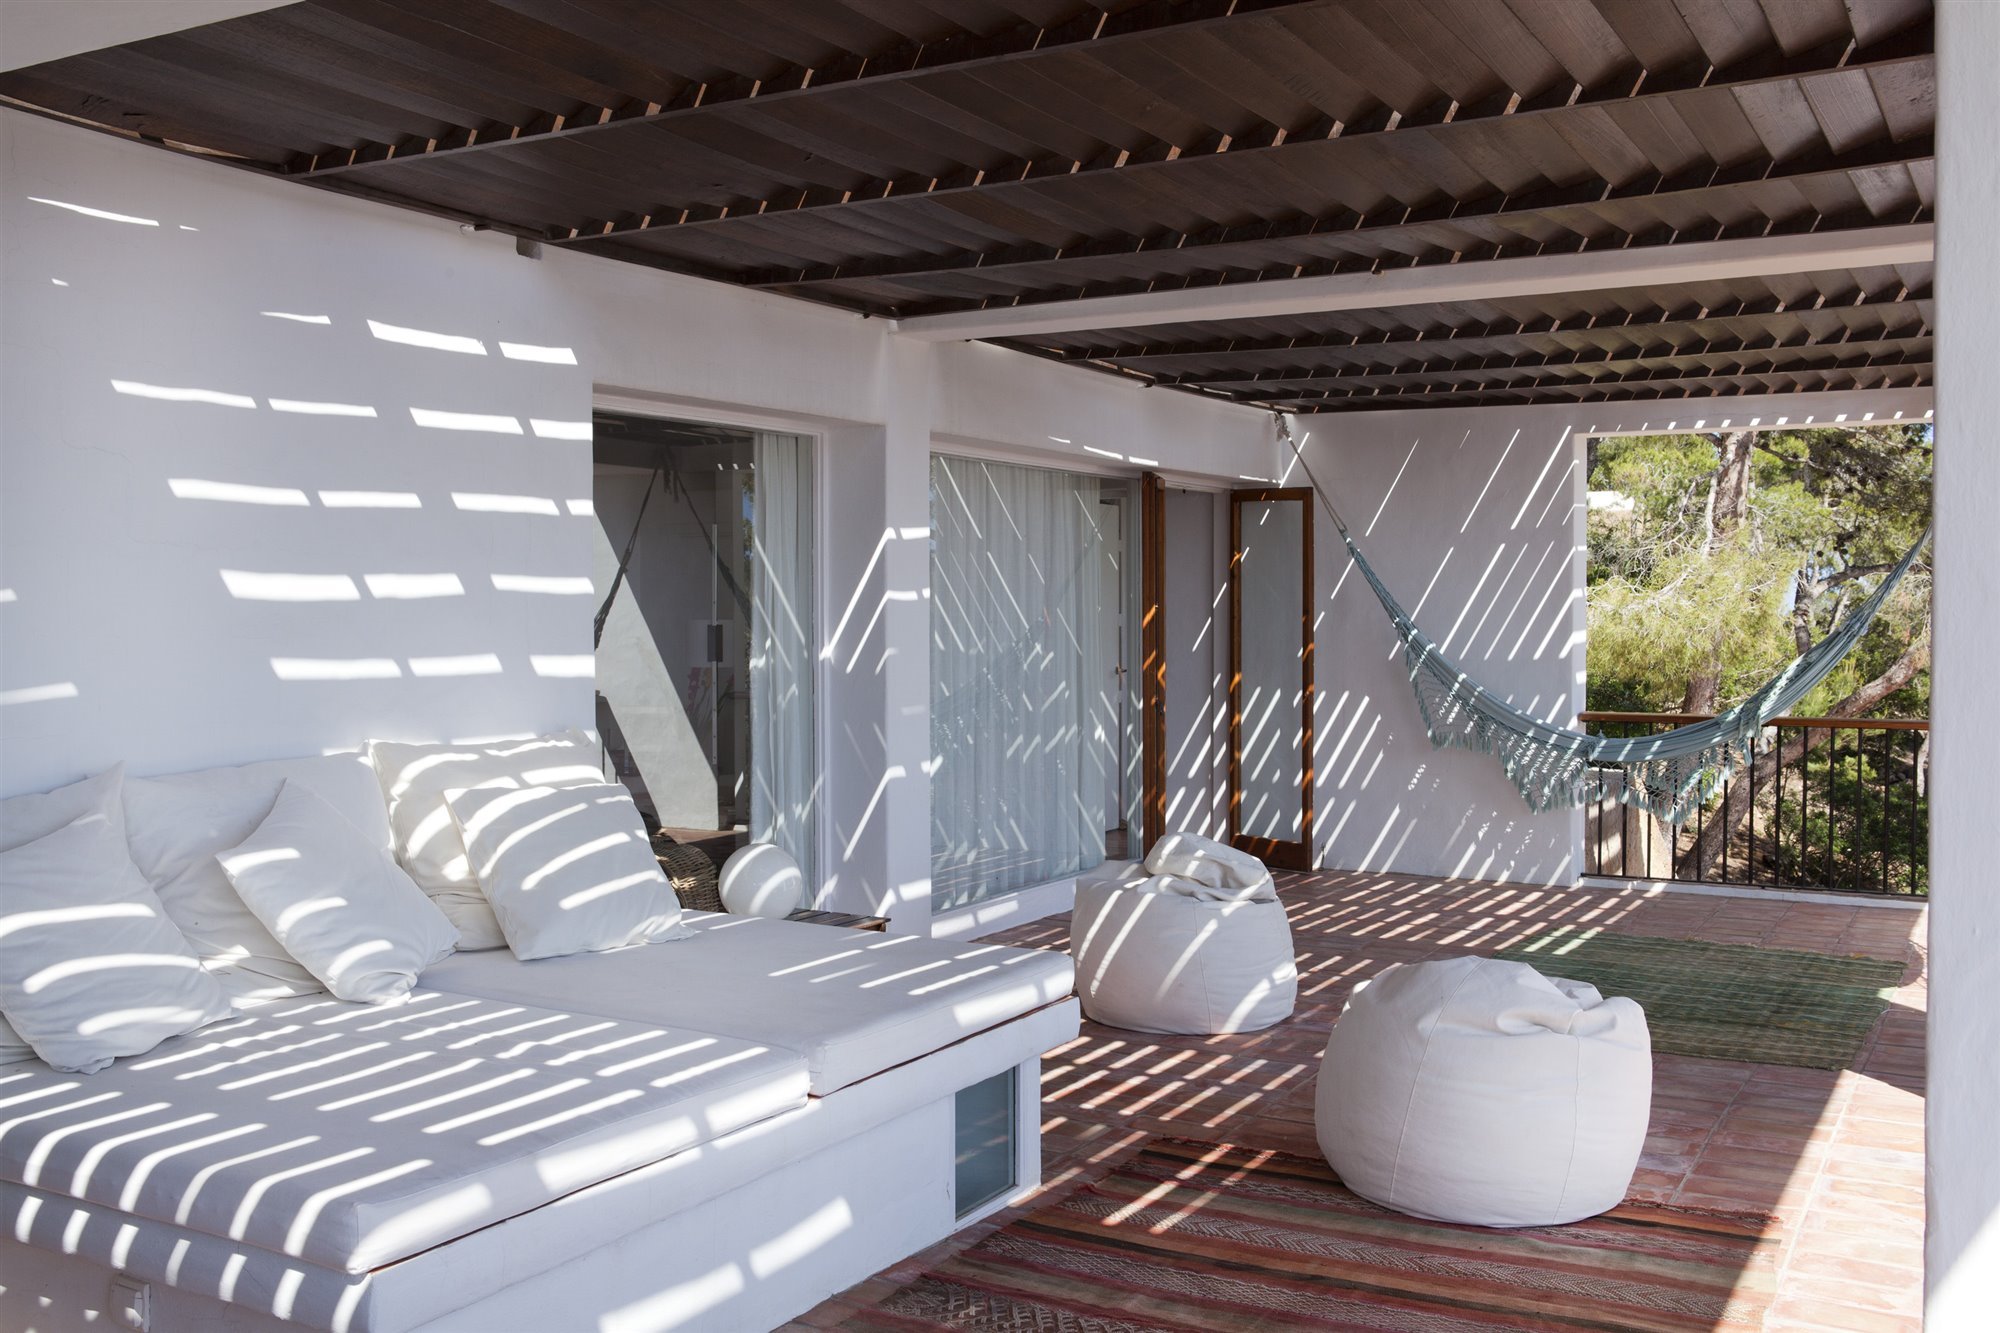 Casa diseñada por Josep Lluis Sert en Ibiza porche con cojines blancos